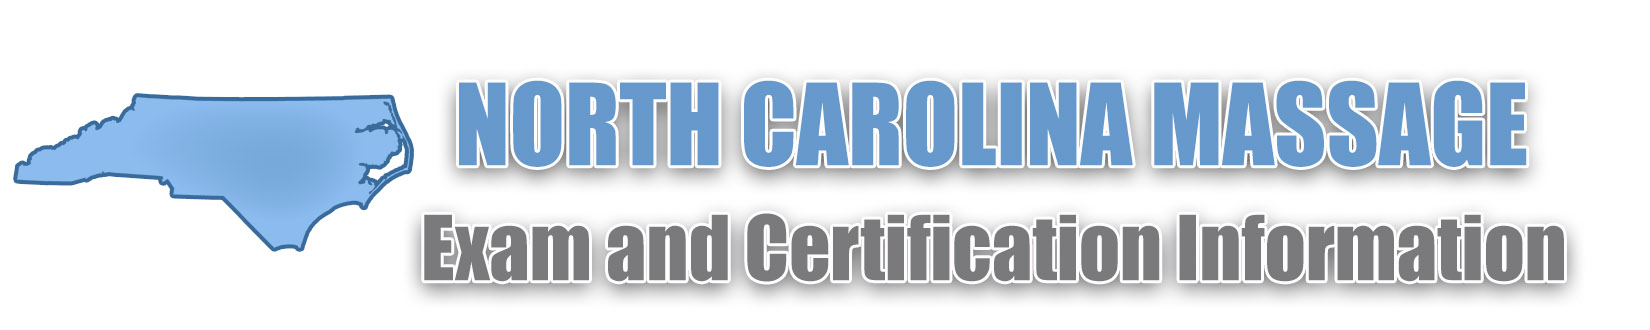 North Carolina MBLEX Massage Exam and Certification Information